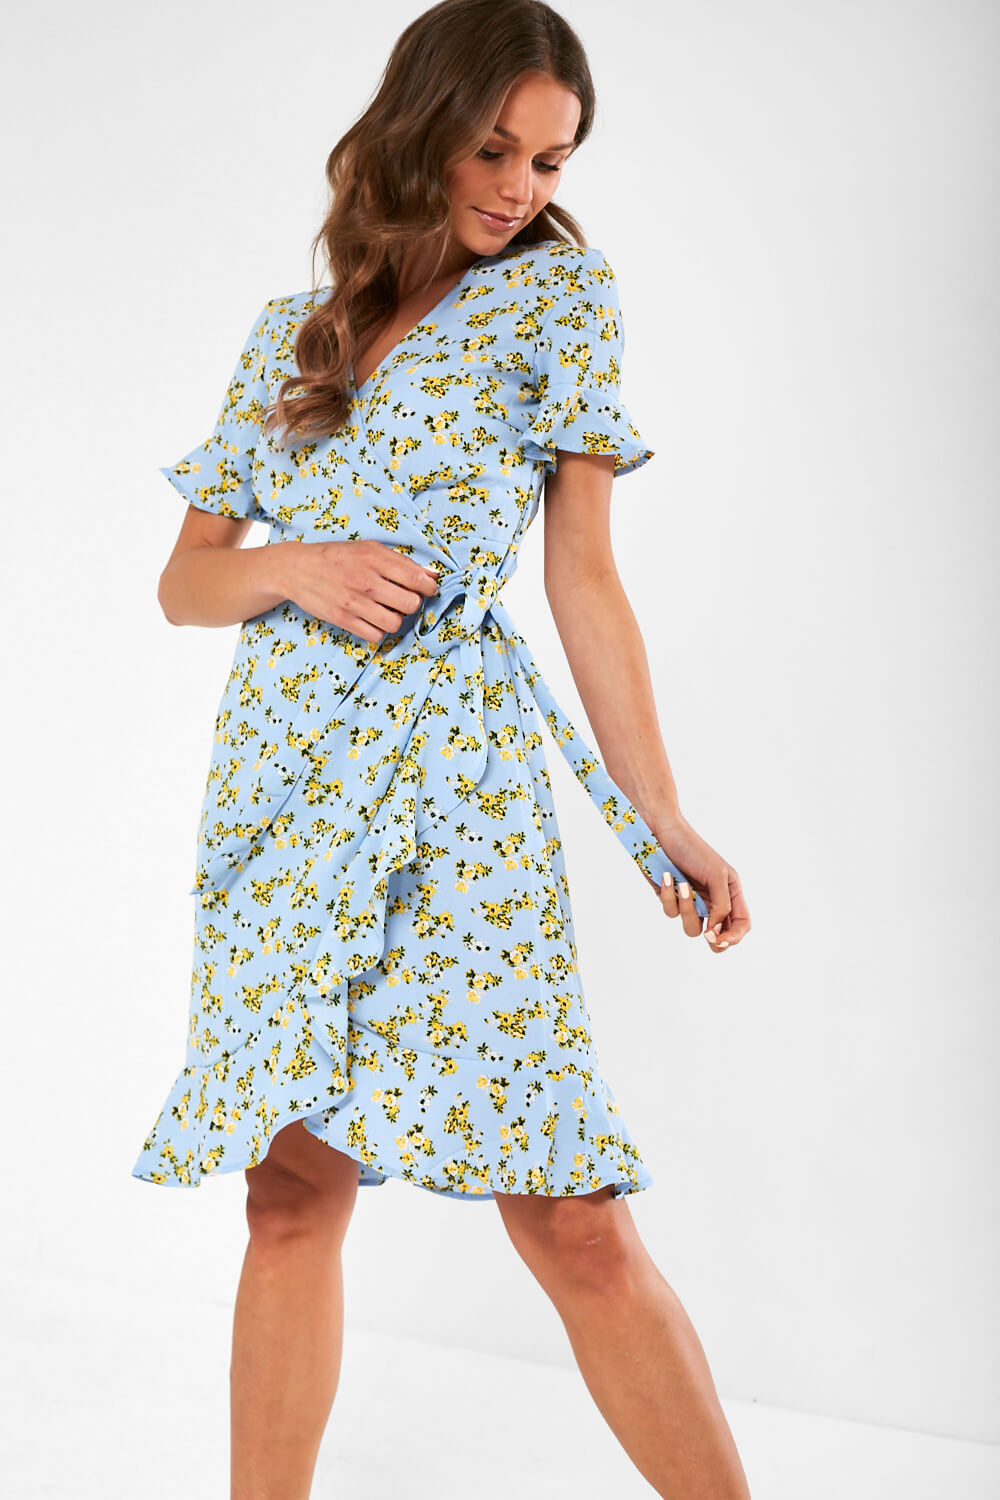 Egenskab knude rysten Vero Moda Saga Floral Print Wrap Dress in Blue | iCLOTHING - iCLOTHING